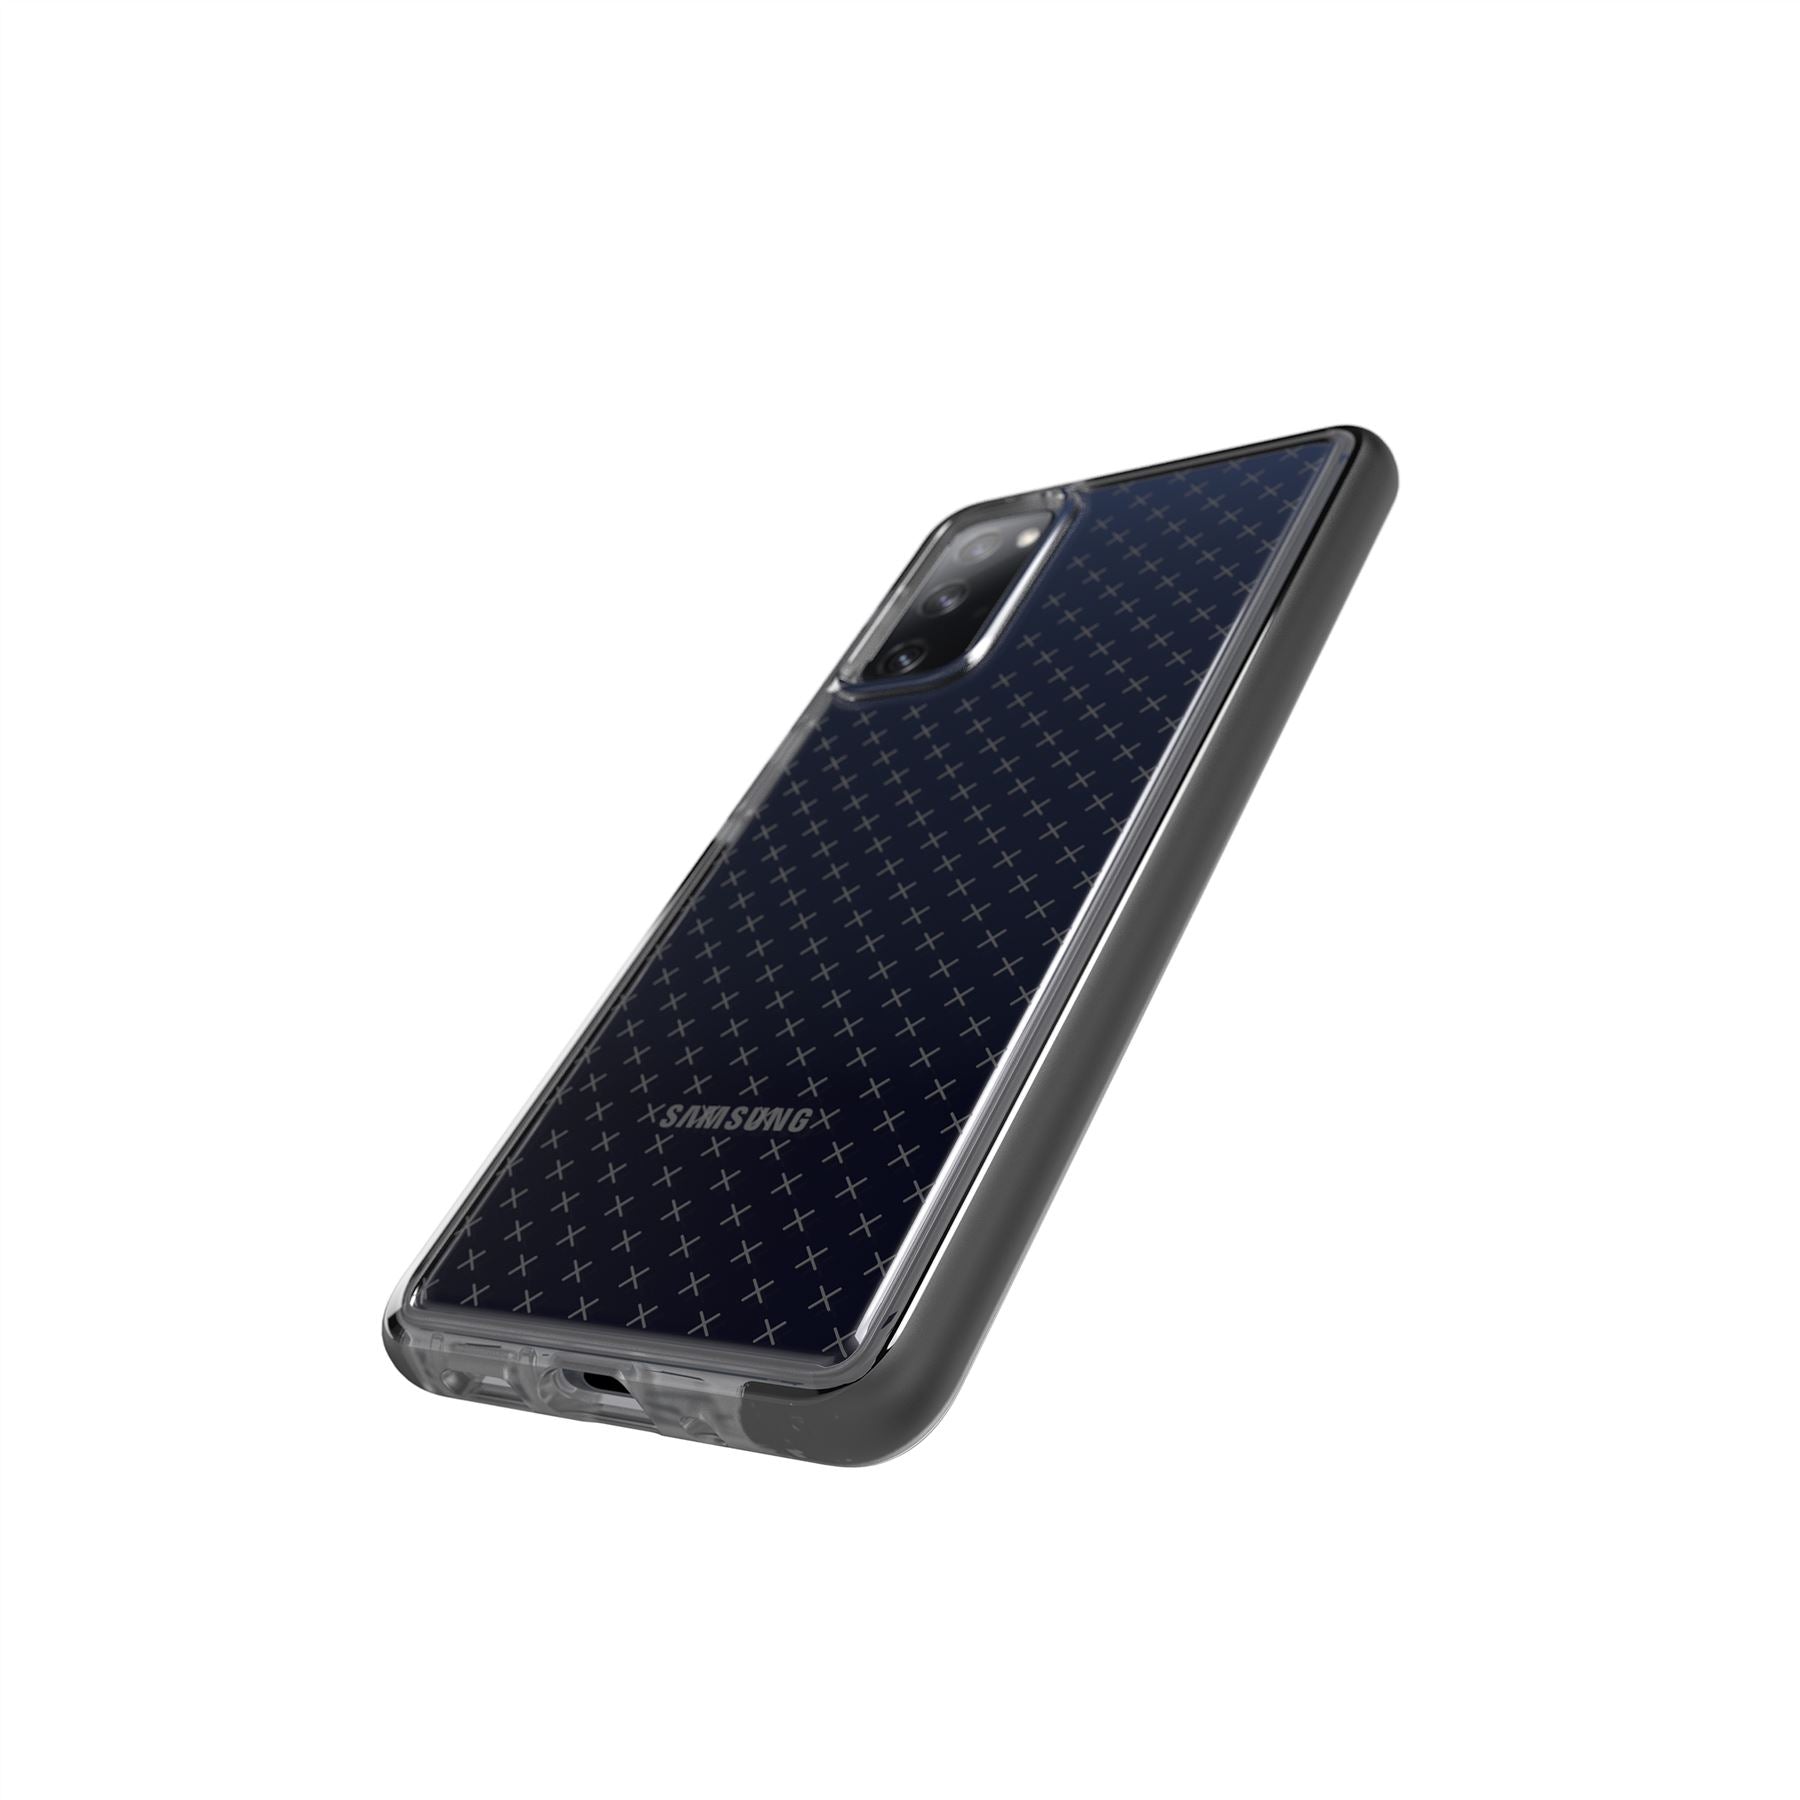 Evo Check - Samsung Galaxy S20 FE 5G Case - Smokey Black